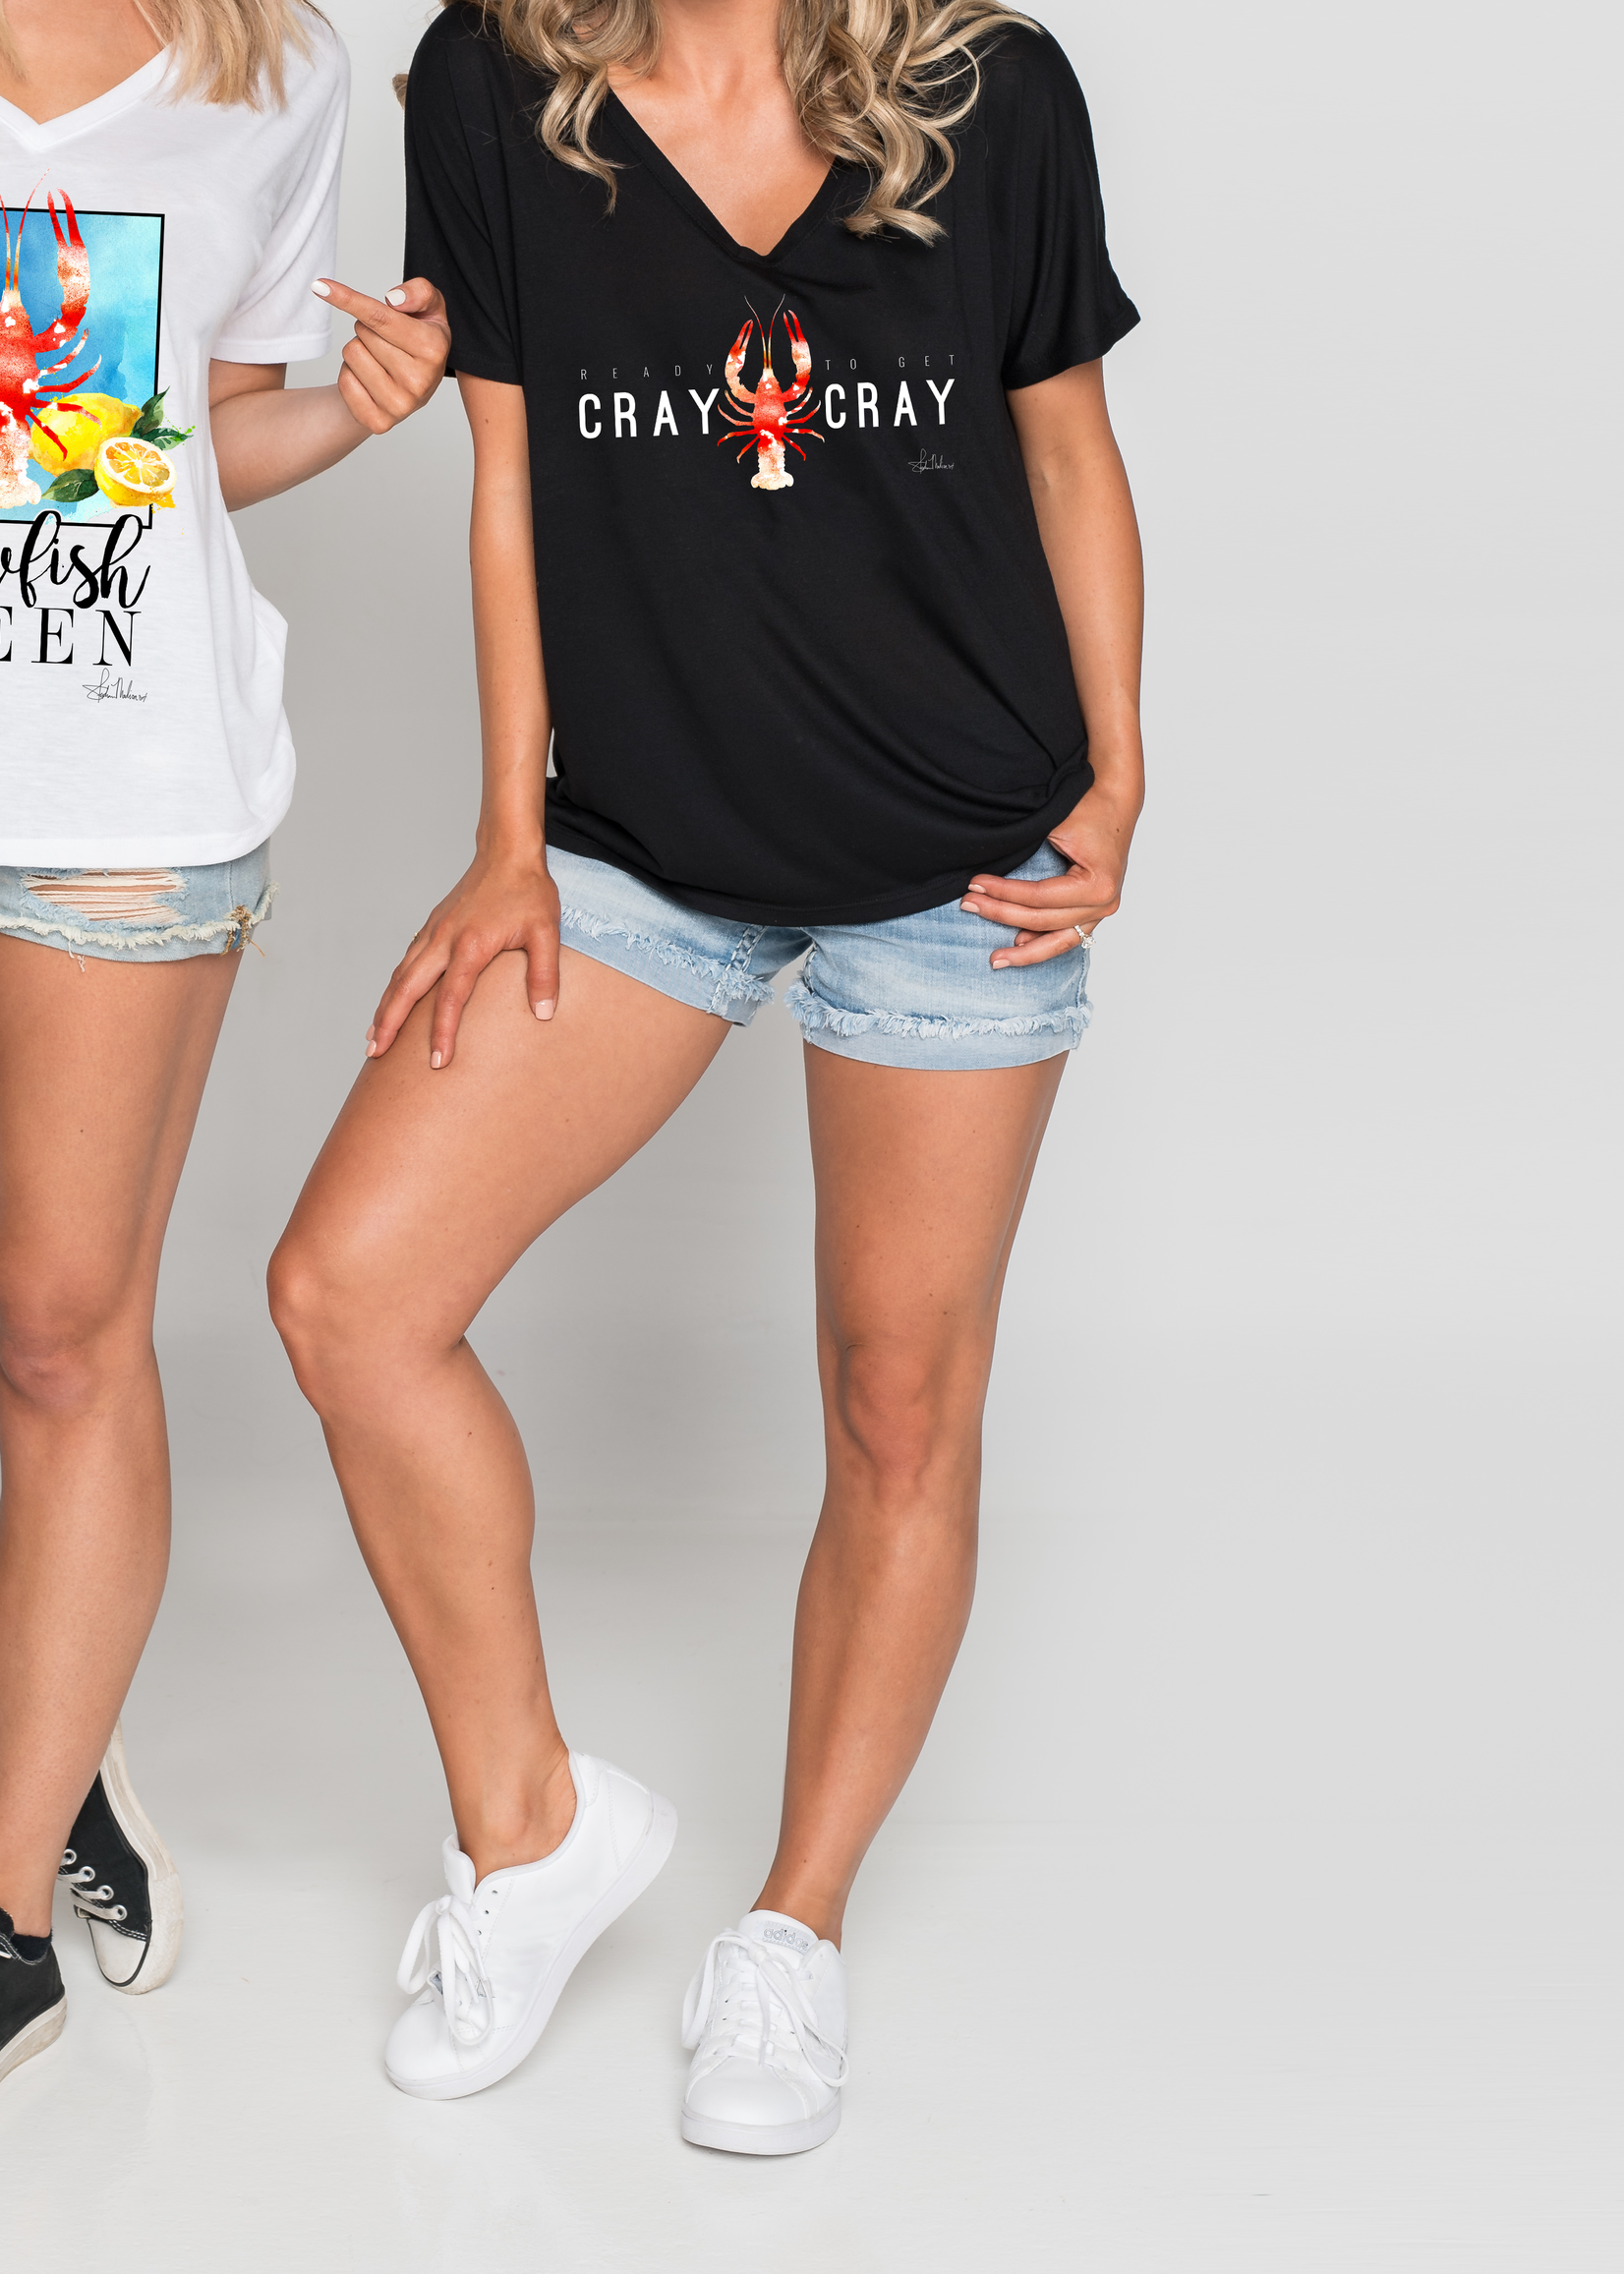 Natty Grace Original Ready To Get Cray Cray Natty Grace Original Graphic Tee - MADE TO ORDER